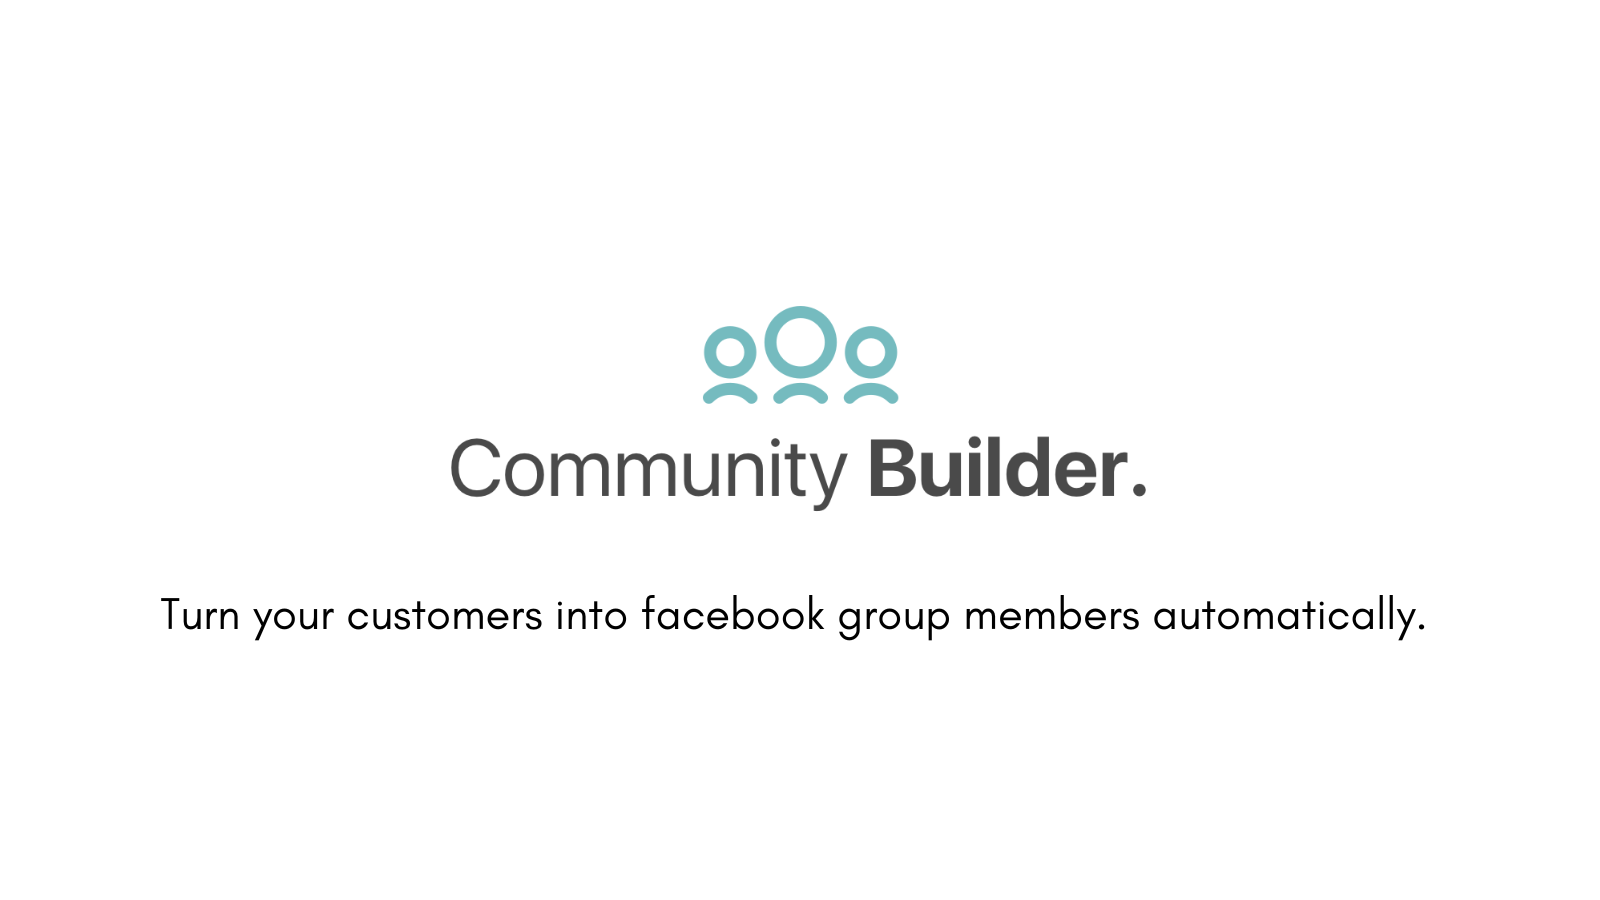 Gemeinschaft Bauherr für Facebook-Gruppen